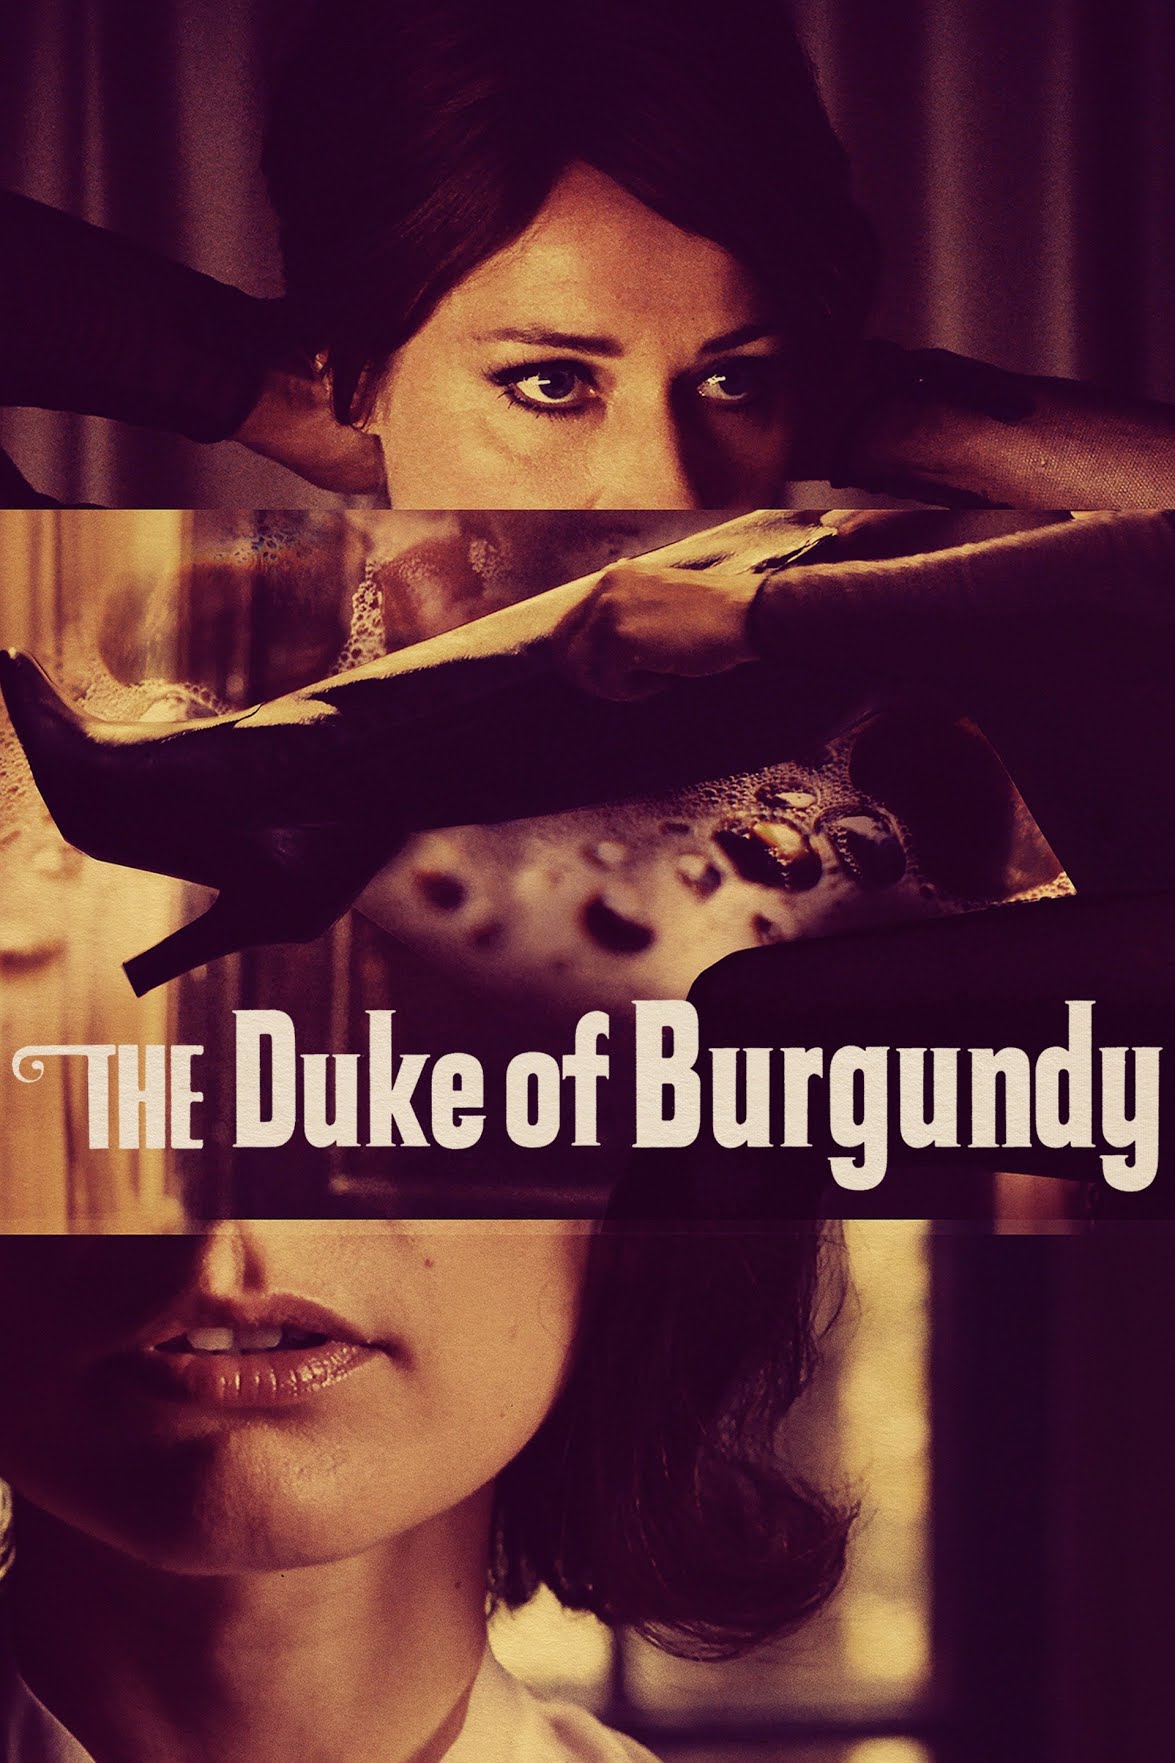 Download The Duke of Burgundy (2014) full movie 480p | 720p